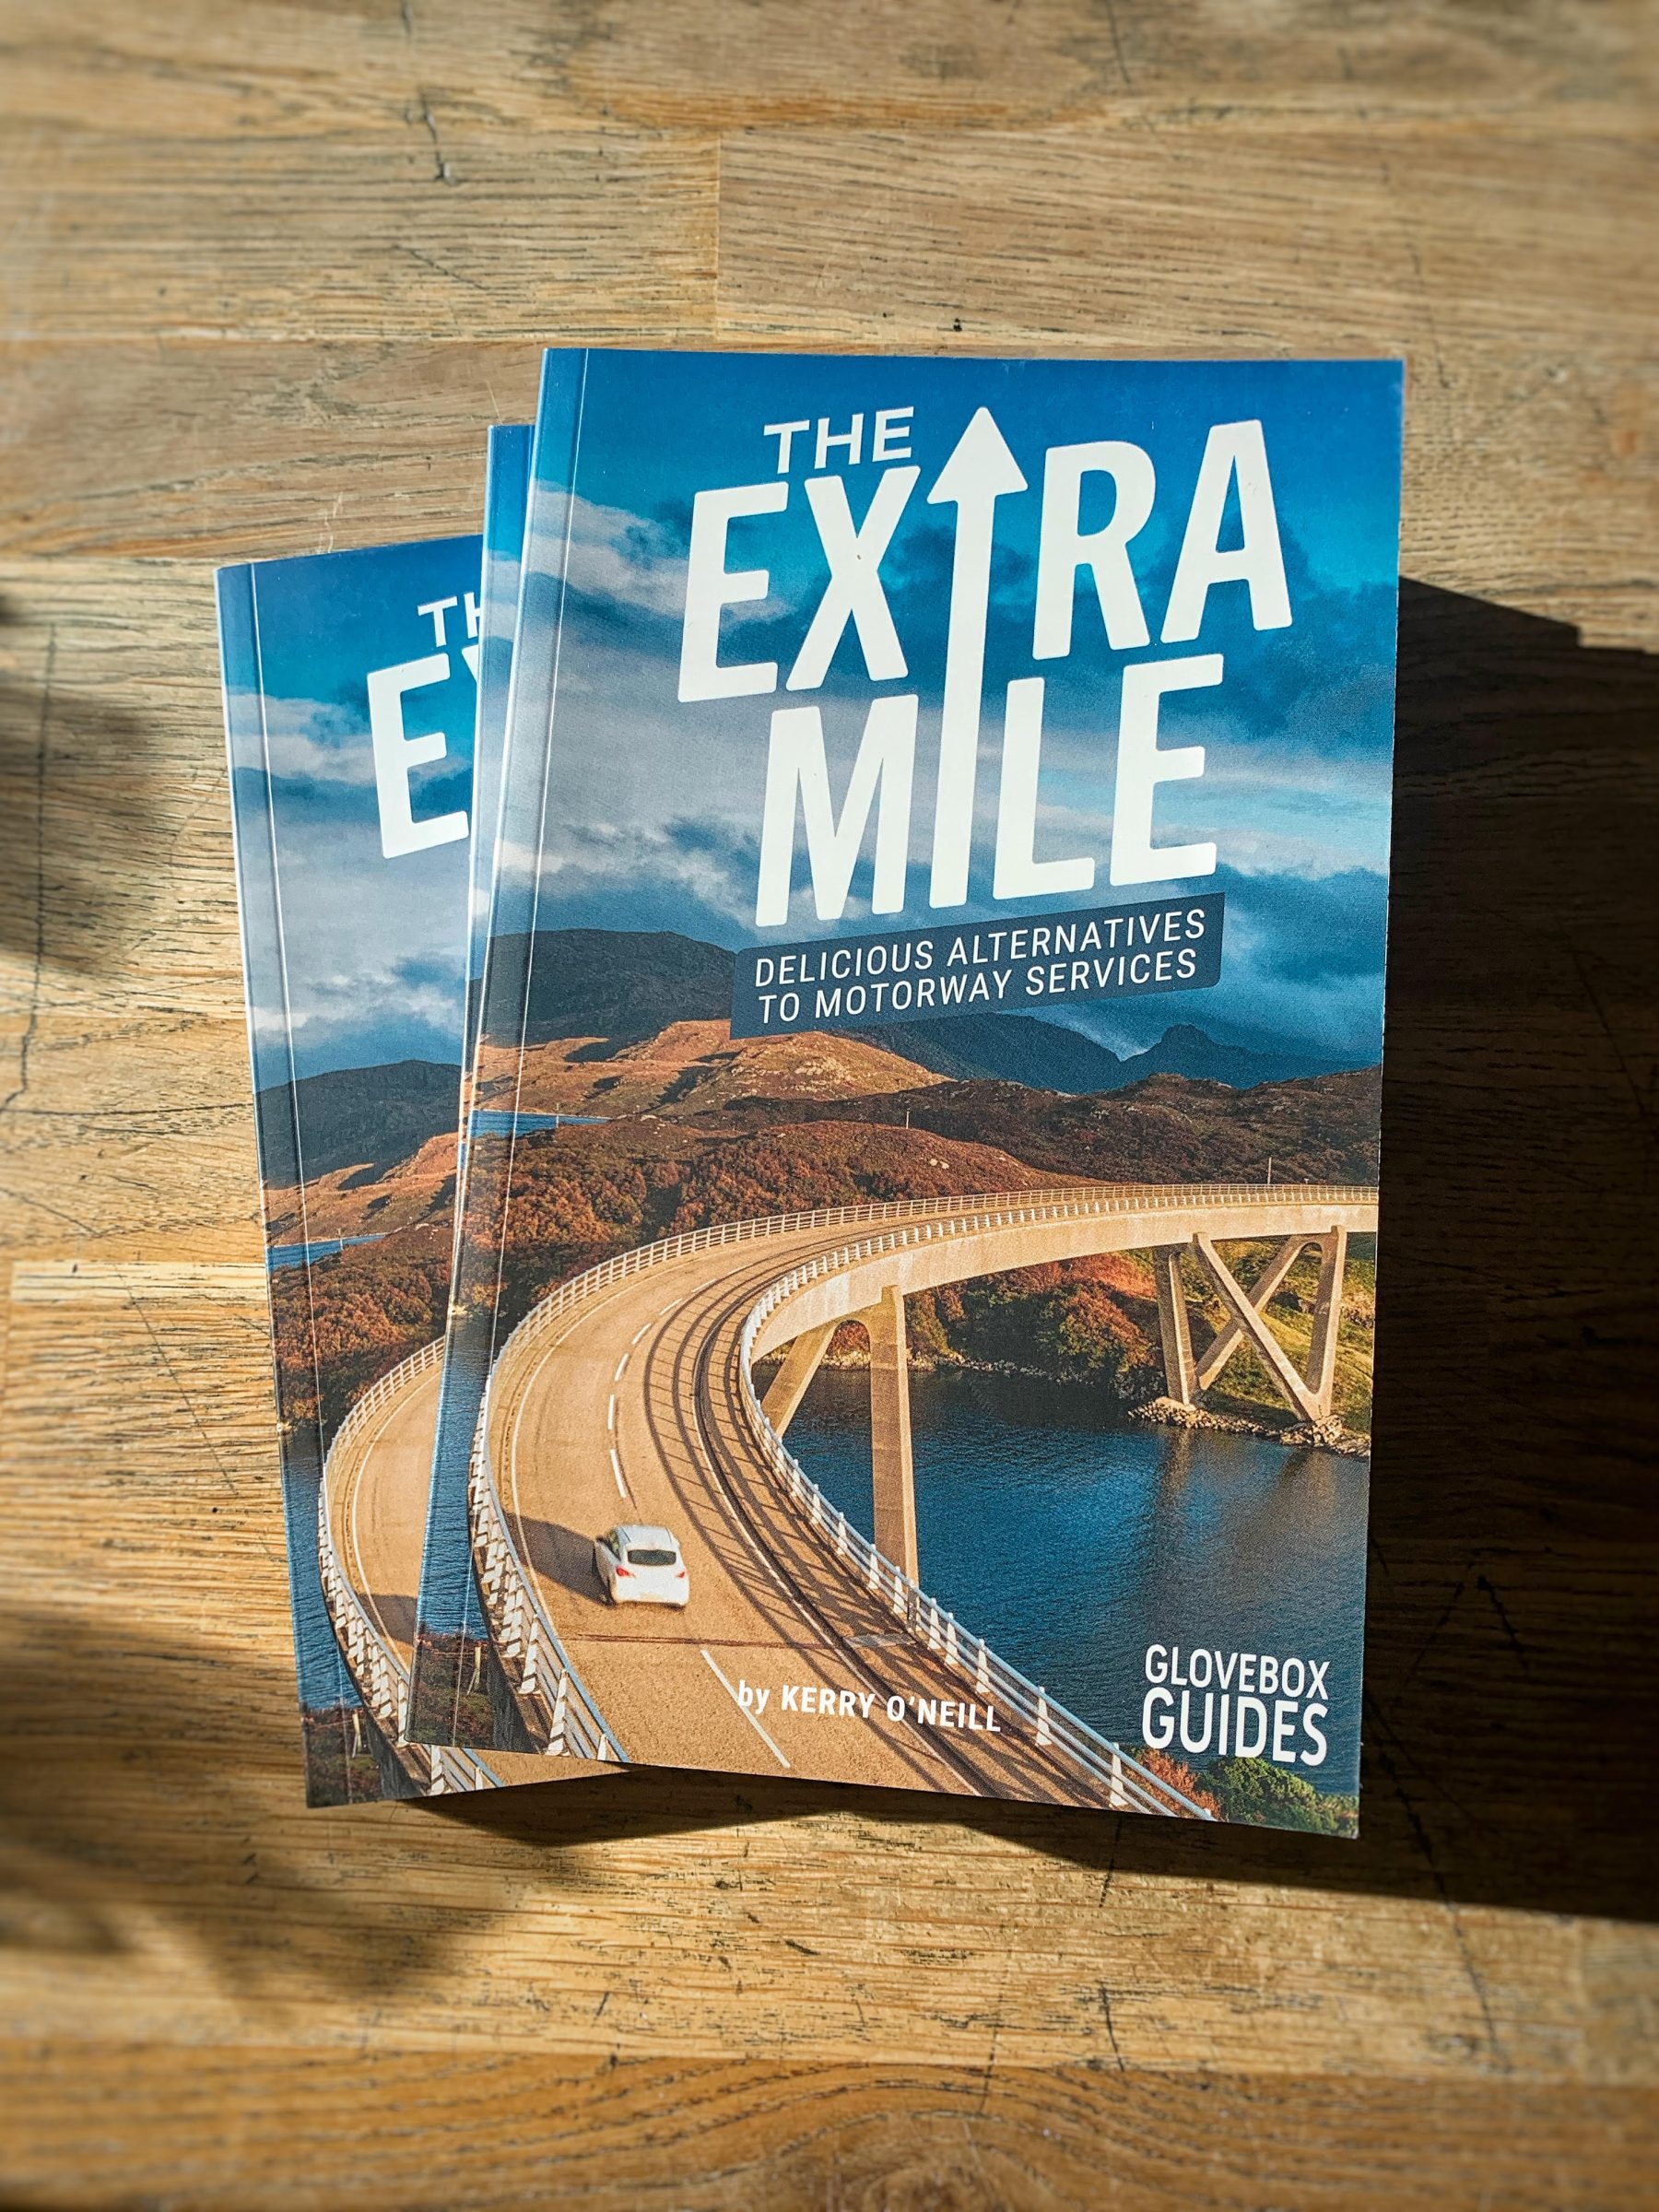 extra mile